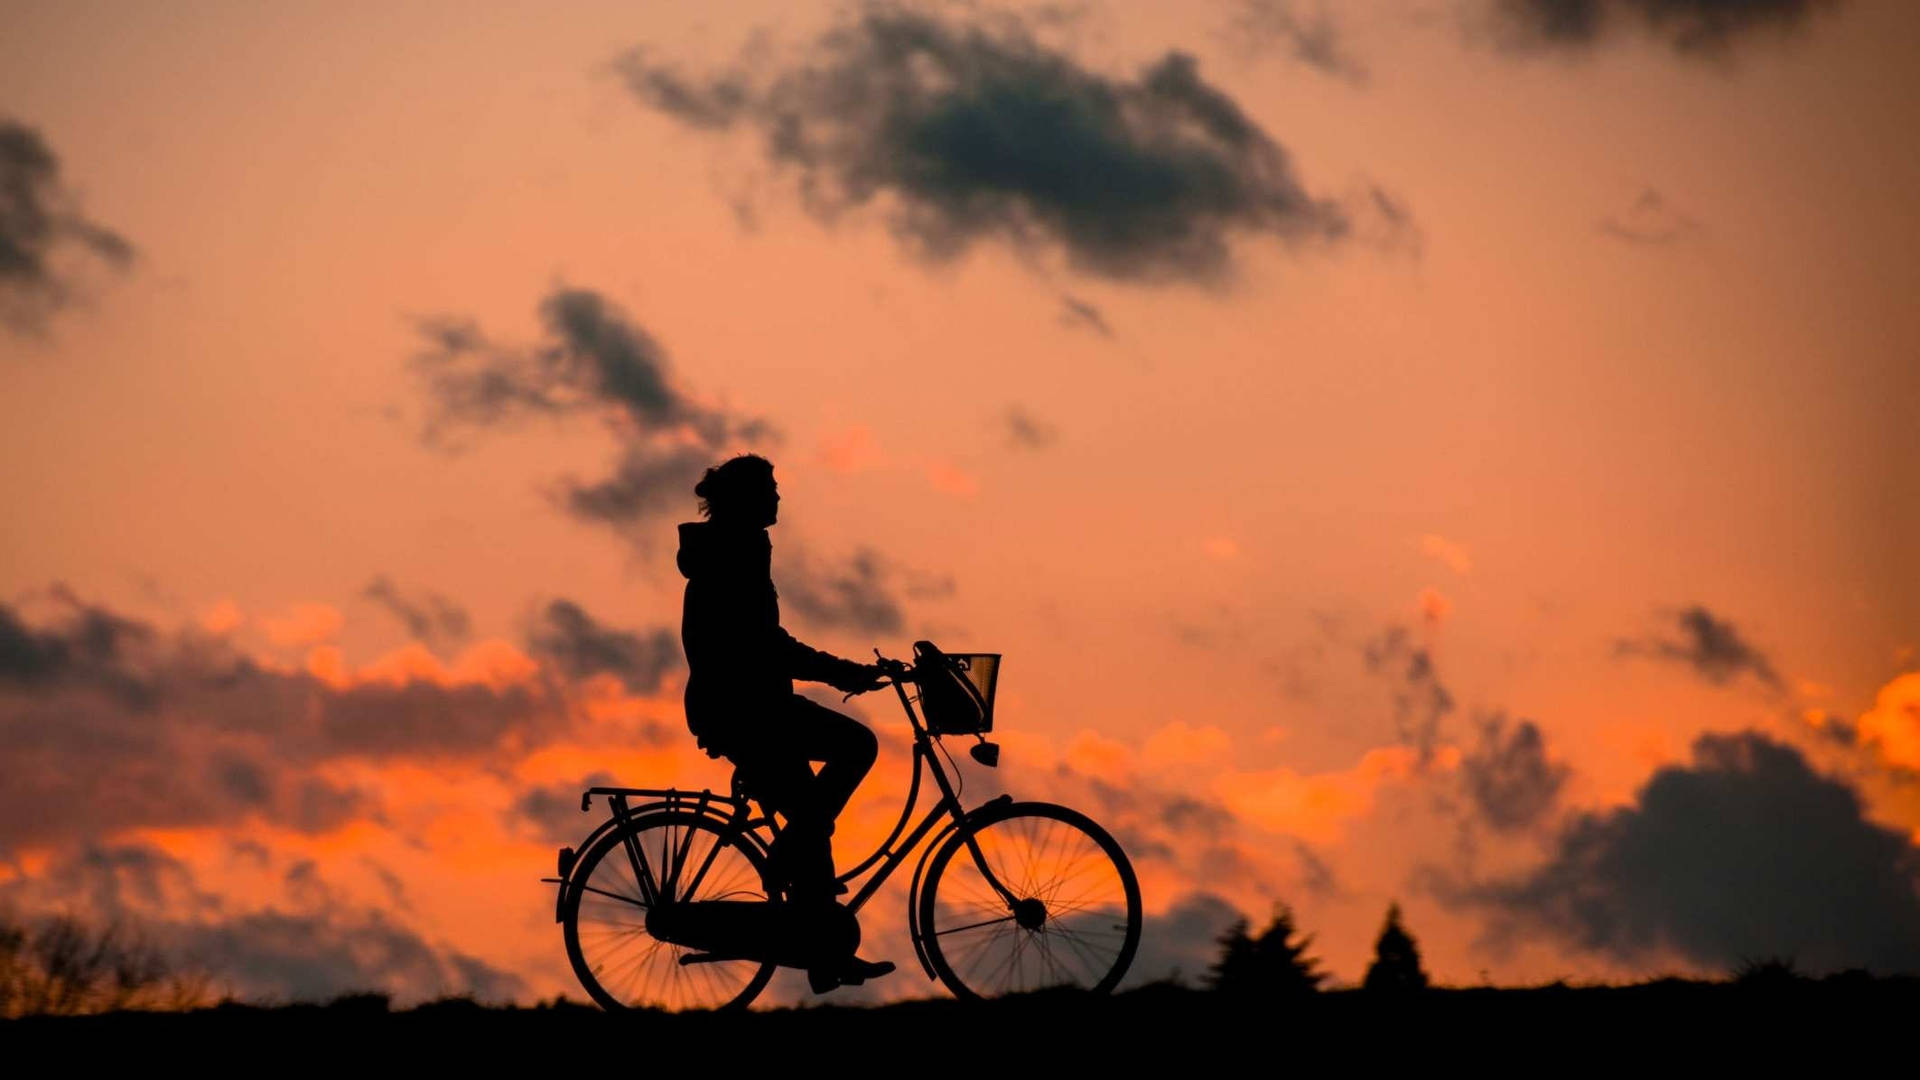 Silhouette Boy Bicyclist Wallpaper